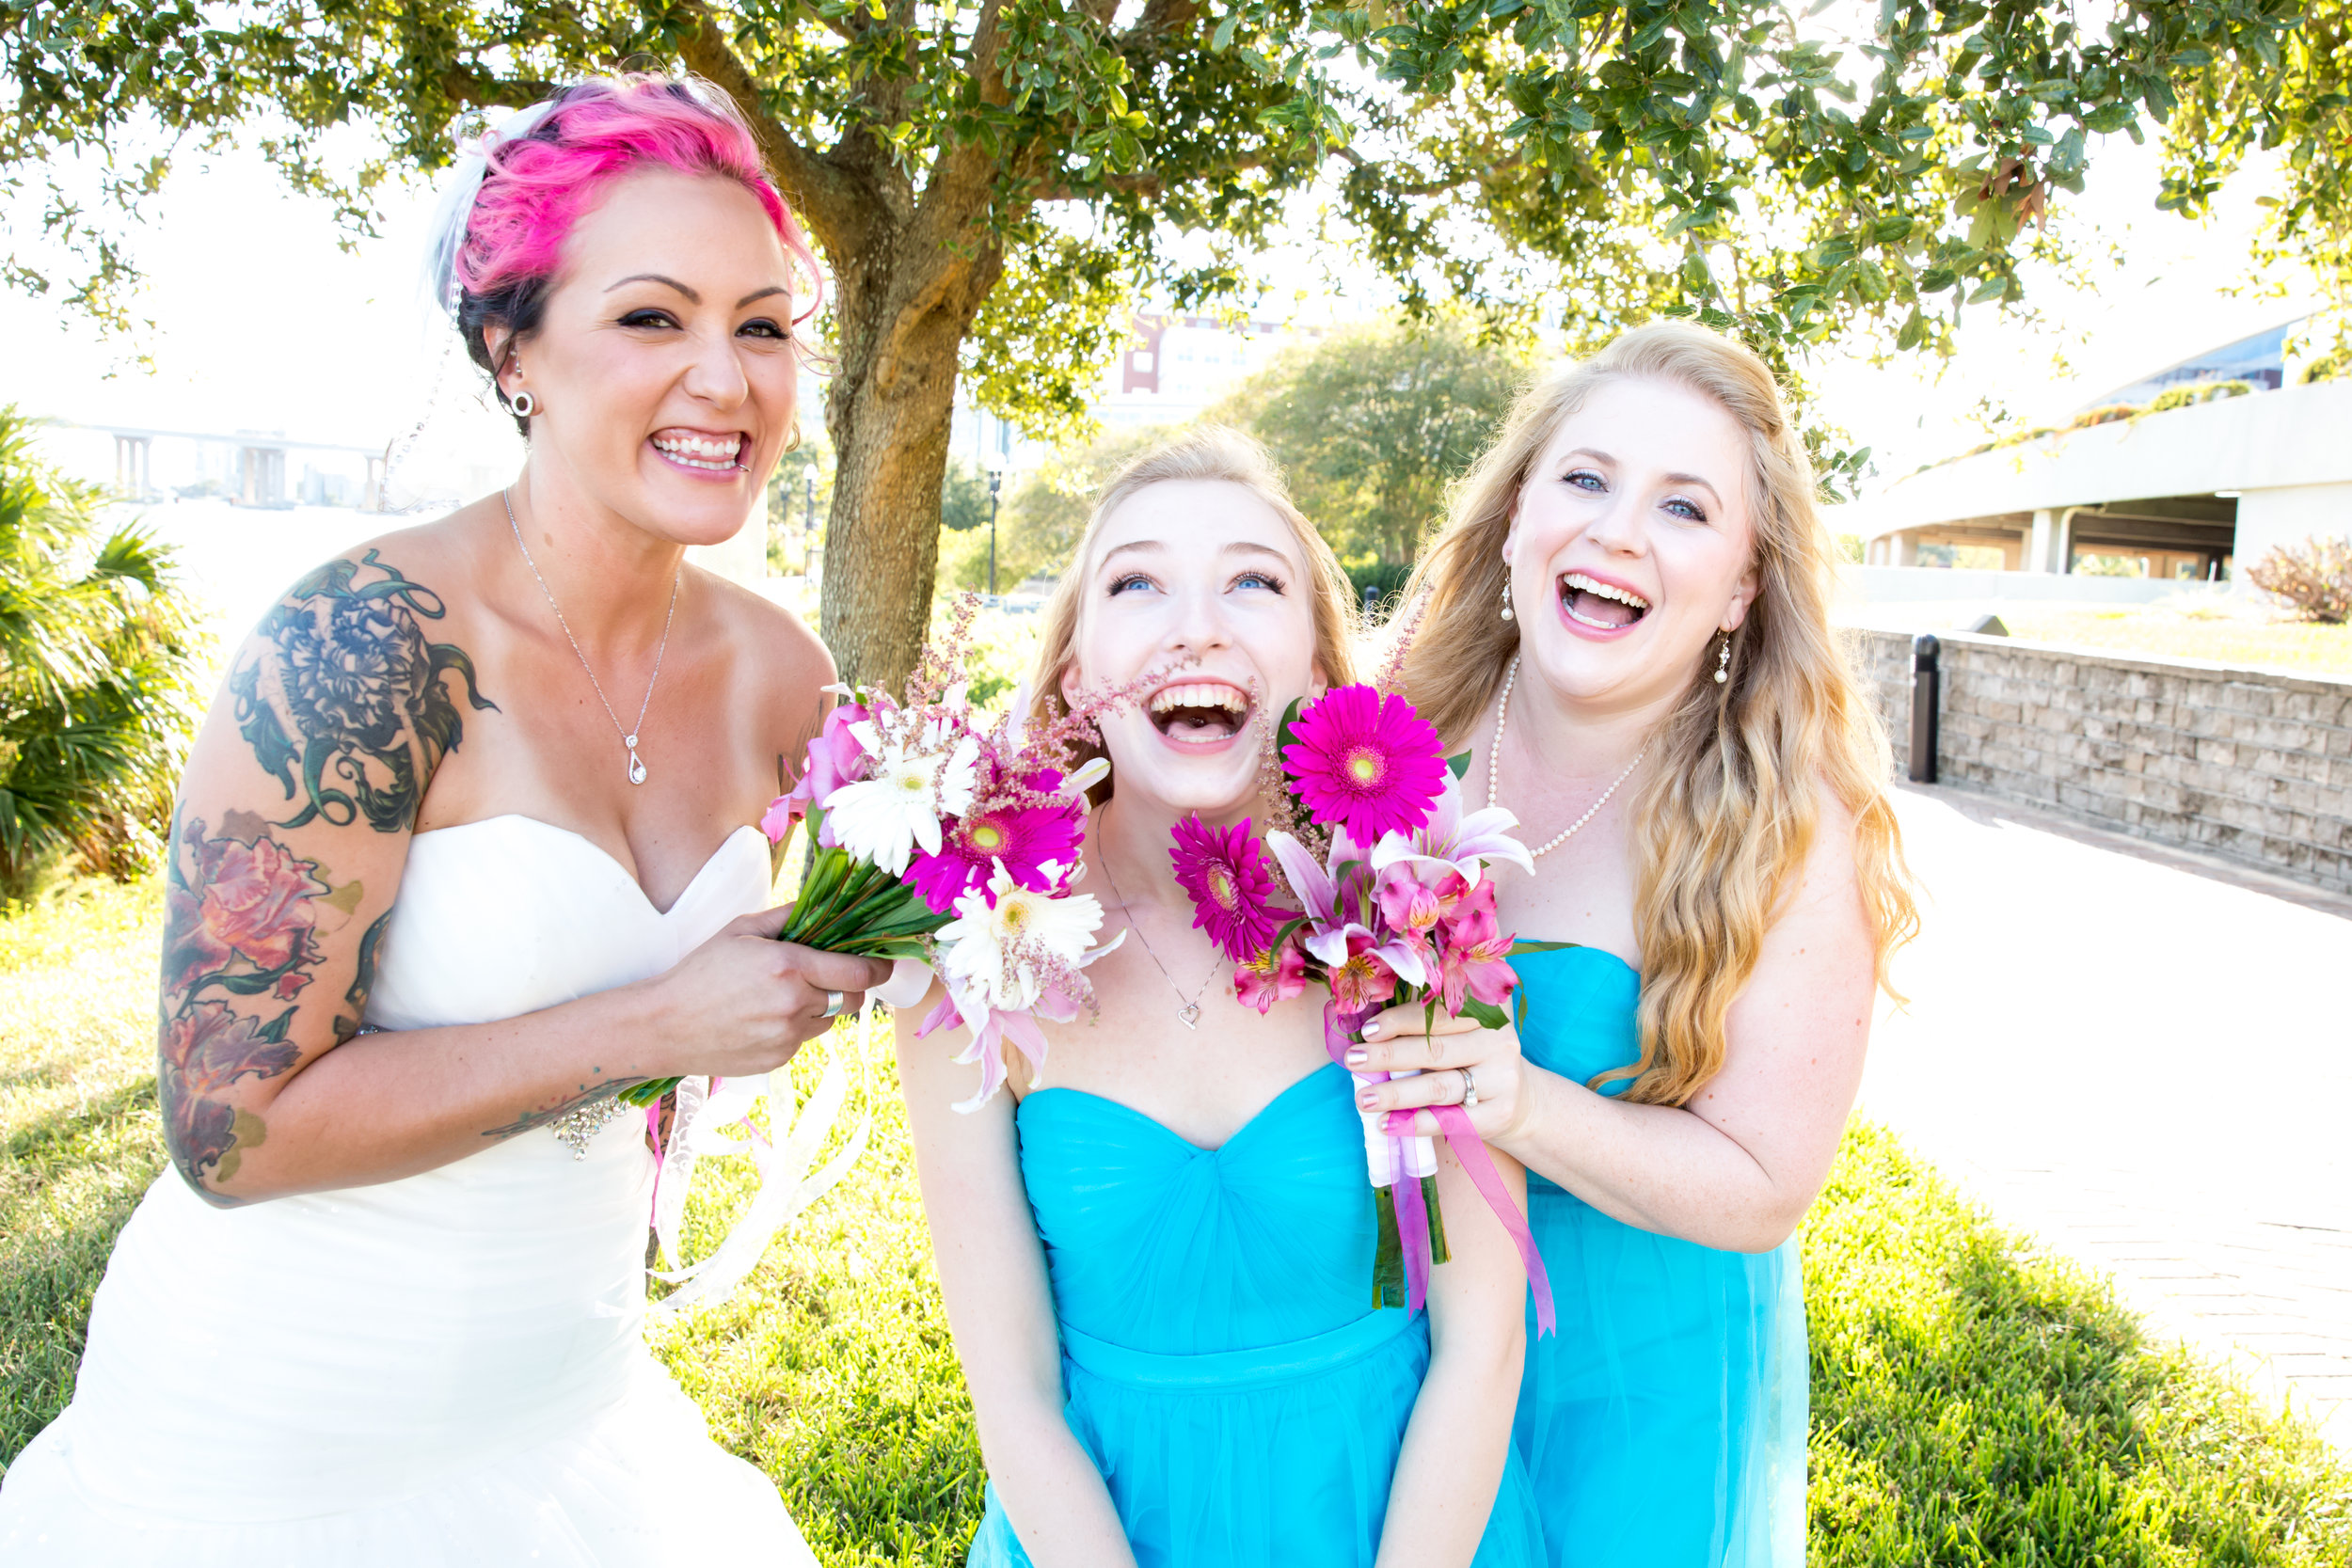 High-Kick-Photography-Wedding-Portraits-Funny-Jacksonville-Florida-Bride-Bridesmaids-Sisters-Pink-Teal-Dresses-LR-2.jpg